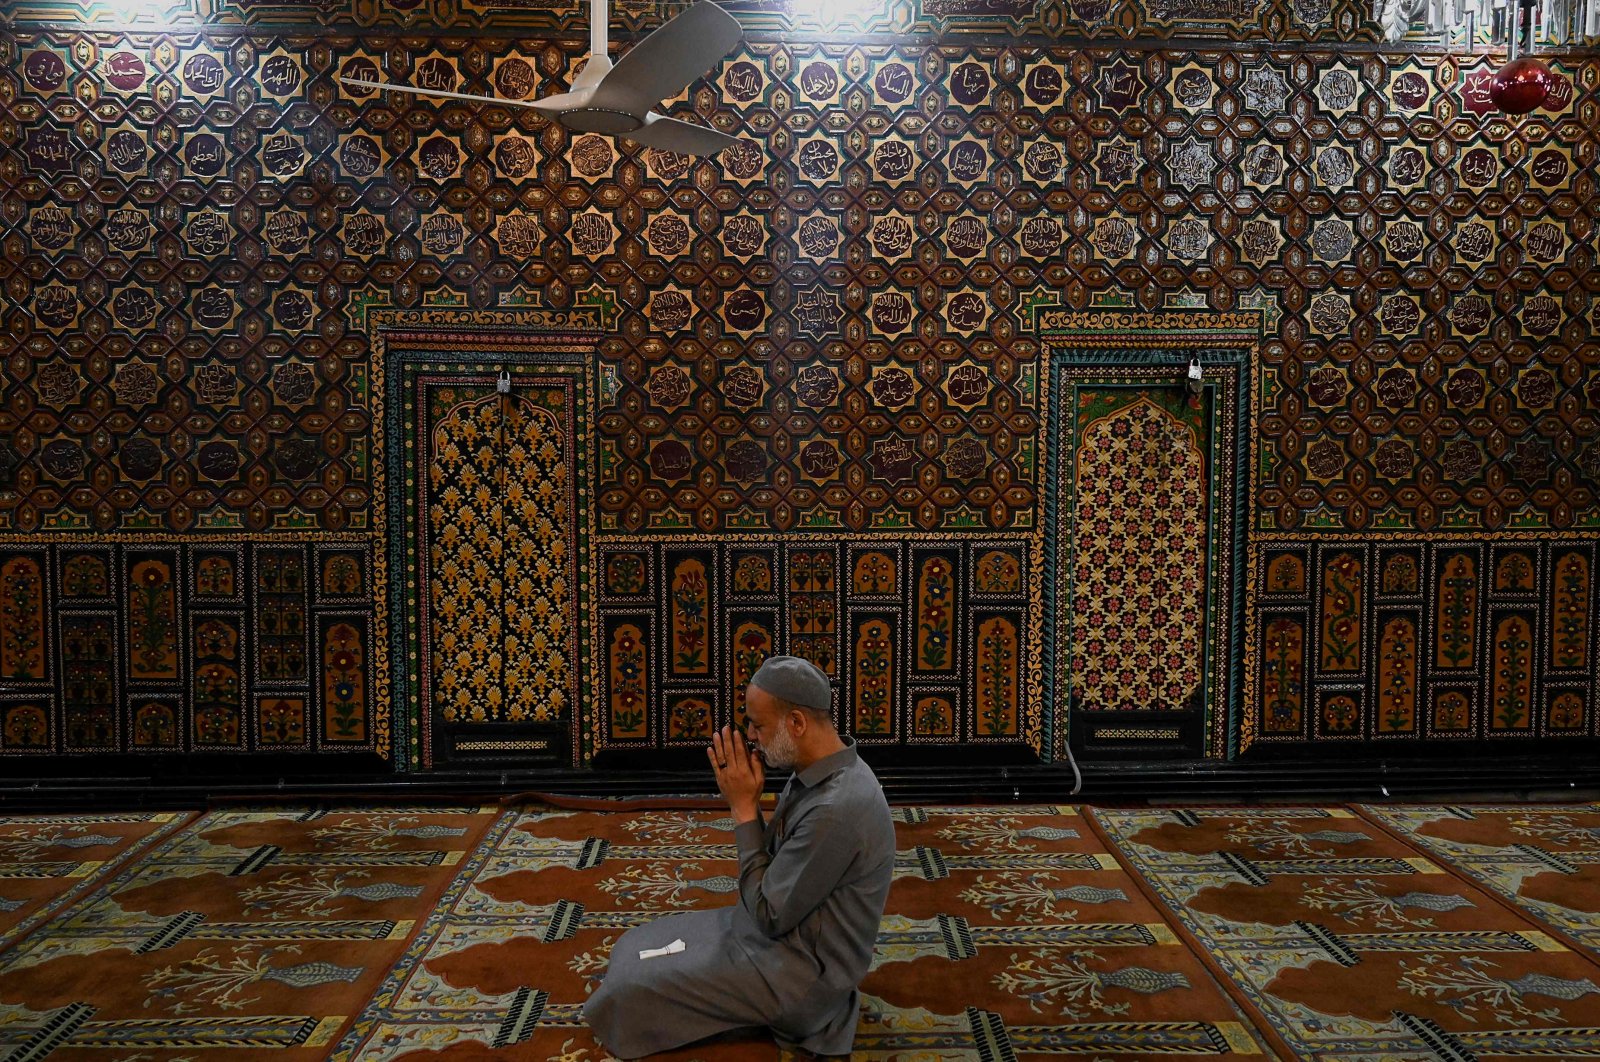 A Muslim devotee prays during the holy month of Ramadan at the Shah-i-Hamdan shrine in Srinagar, Kashmir, Apr. 13, 2022. (AFP)